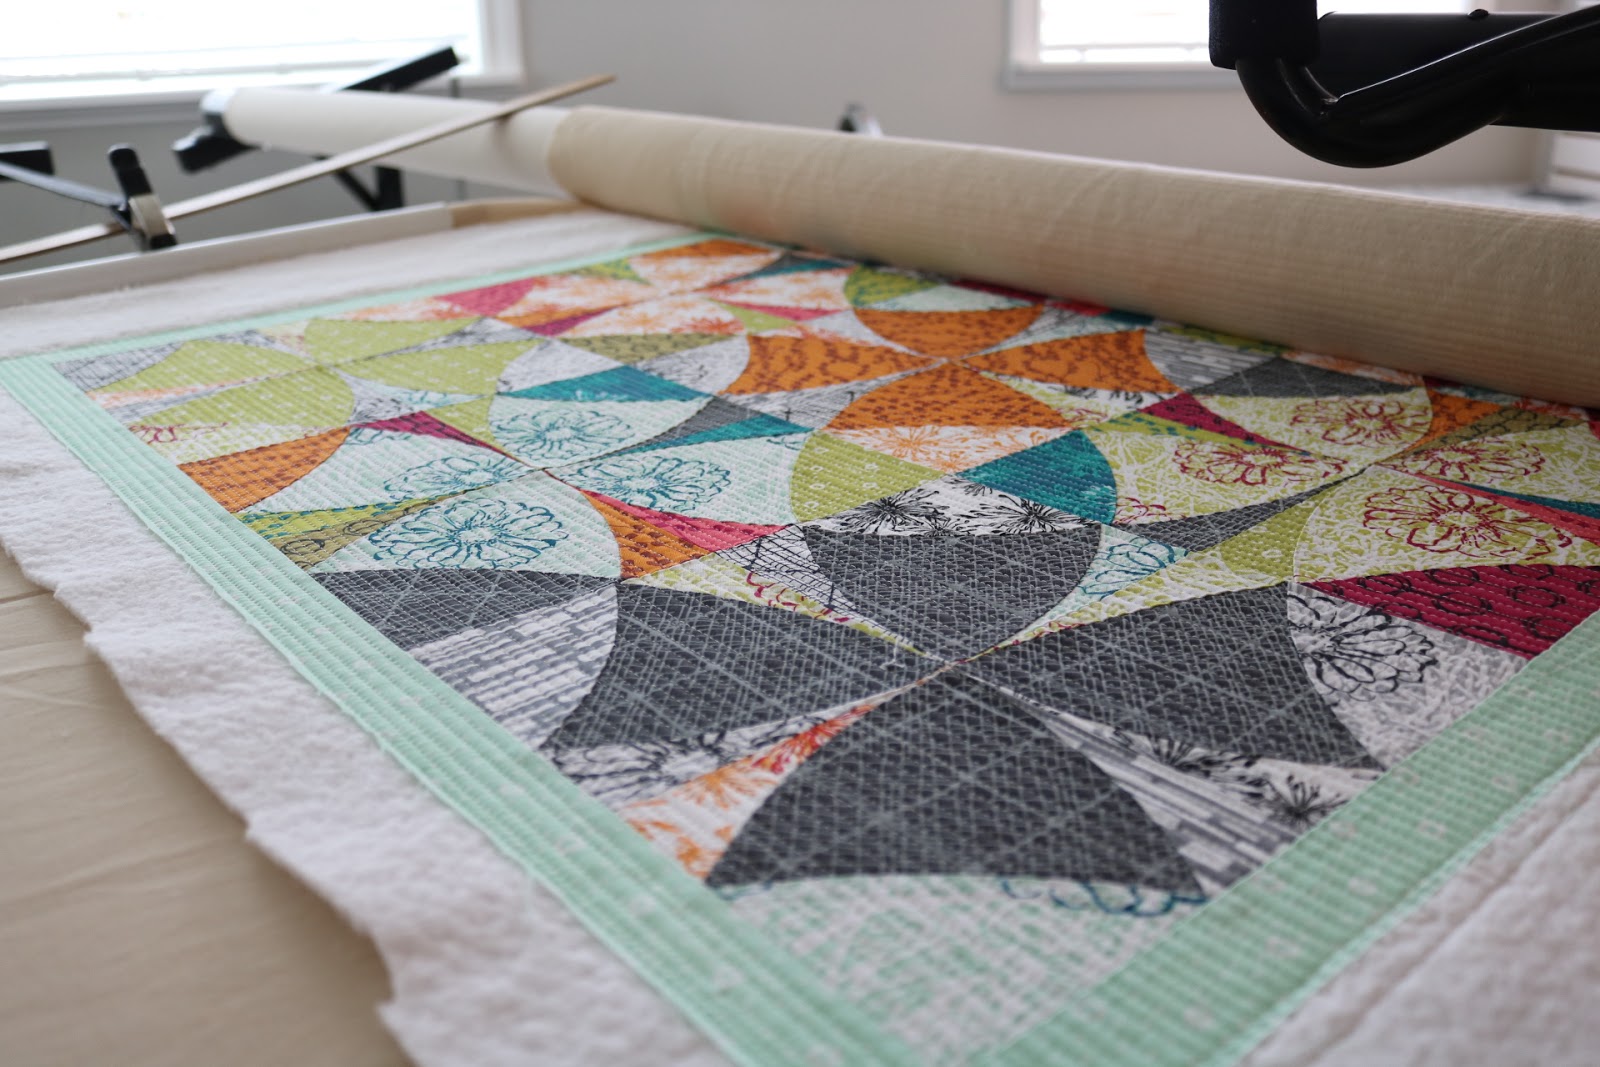 Natalie Barns Hand Maker Fabric Blog Tour Giveaway! – Sew Kind of